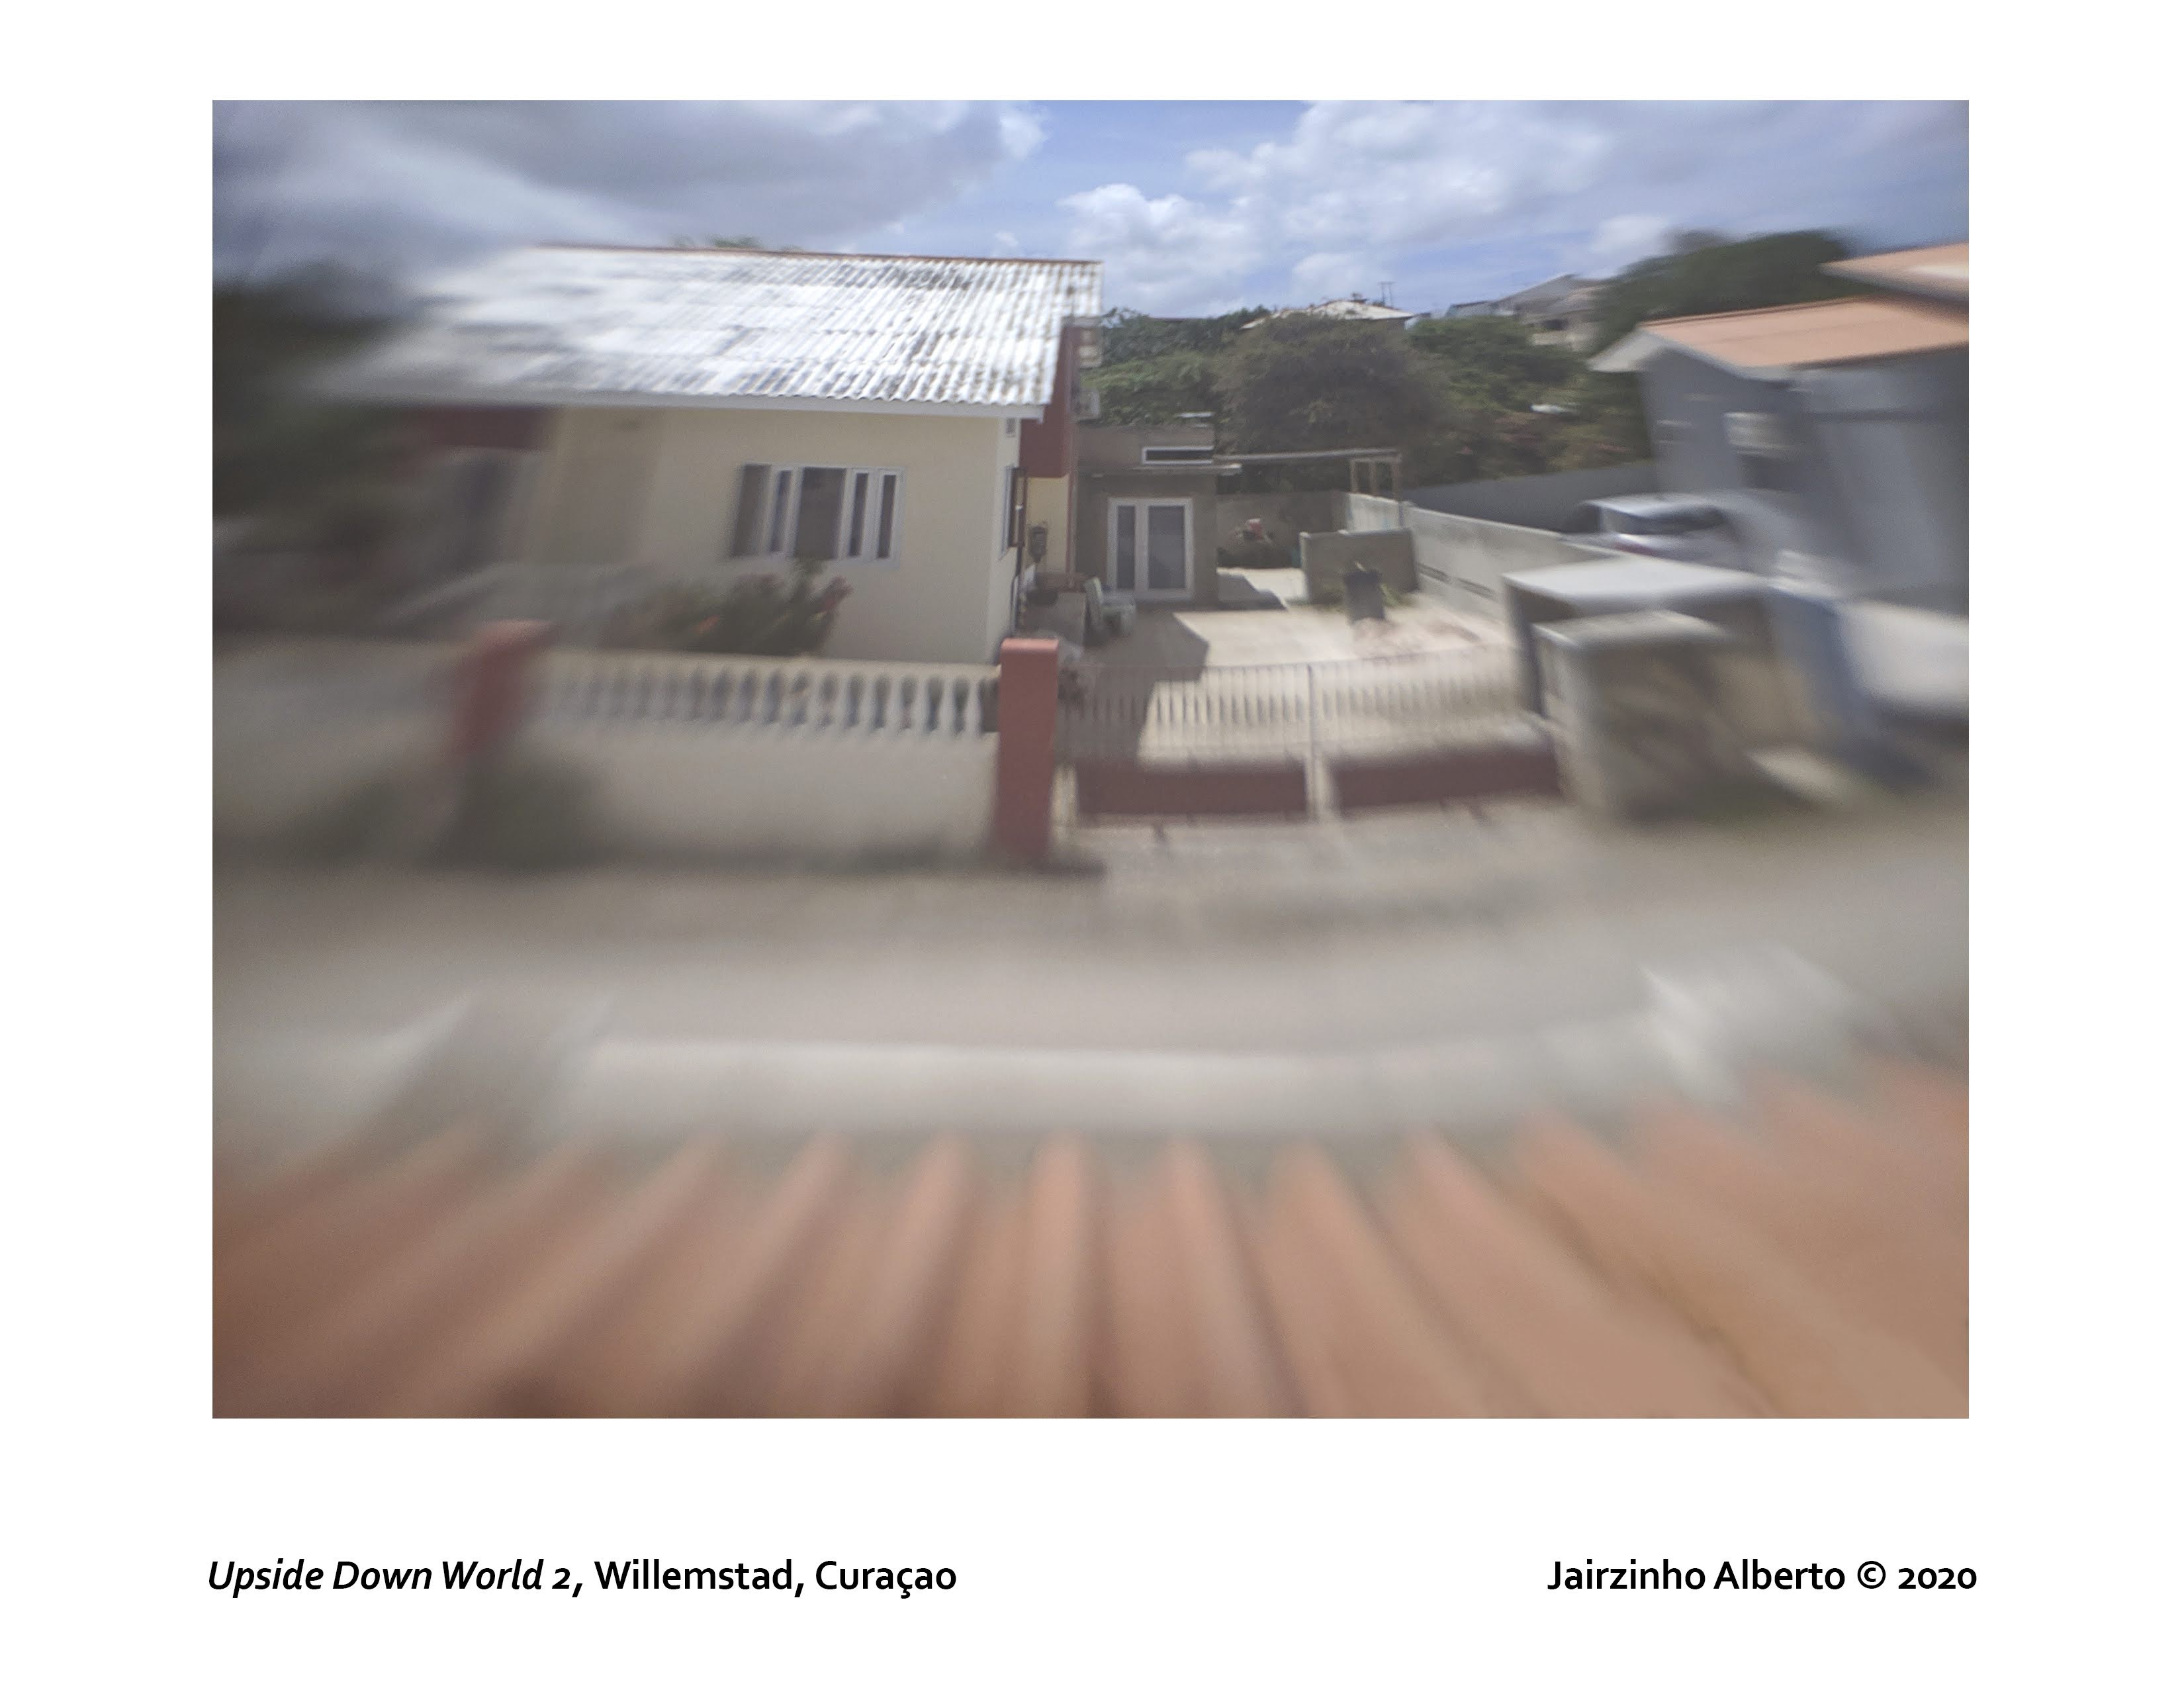 Jairzinho Alberto camera obscura print of his neighborhood